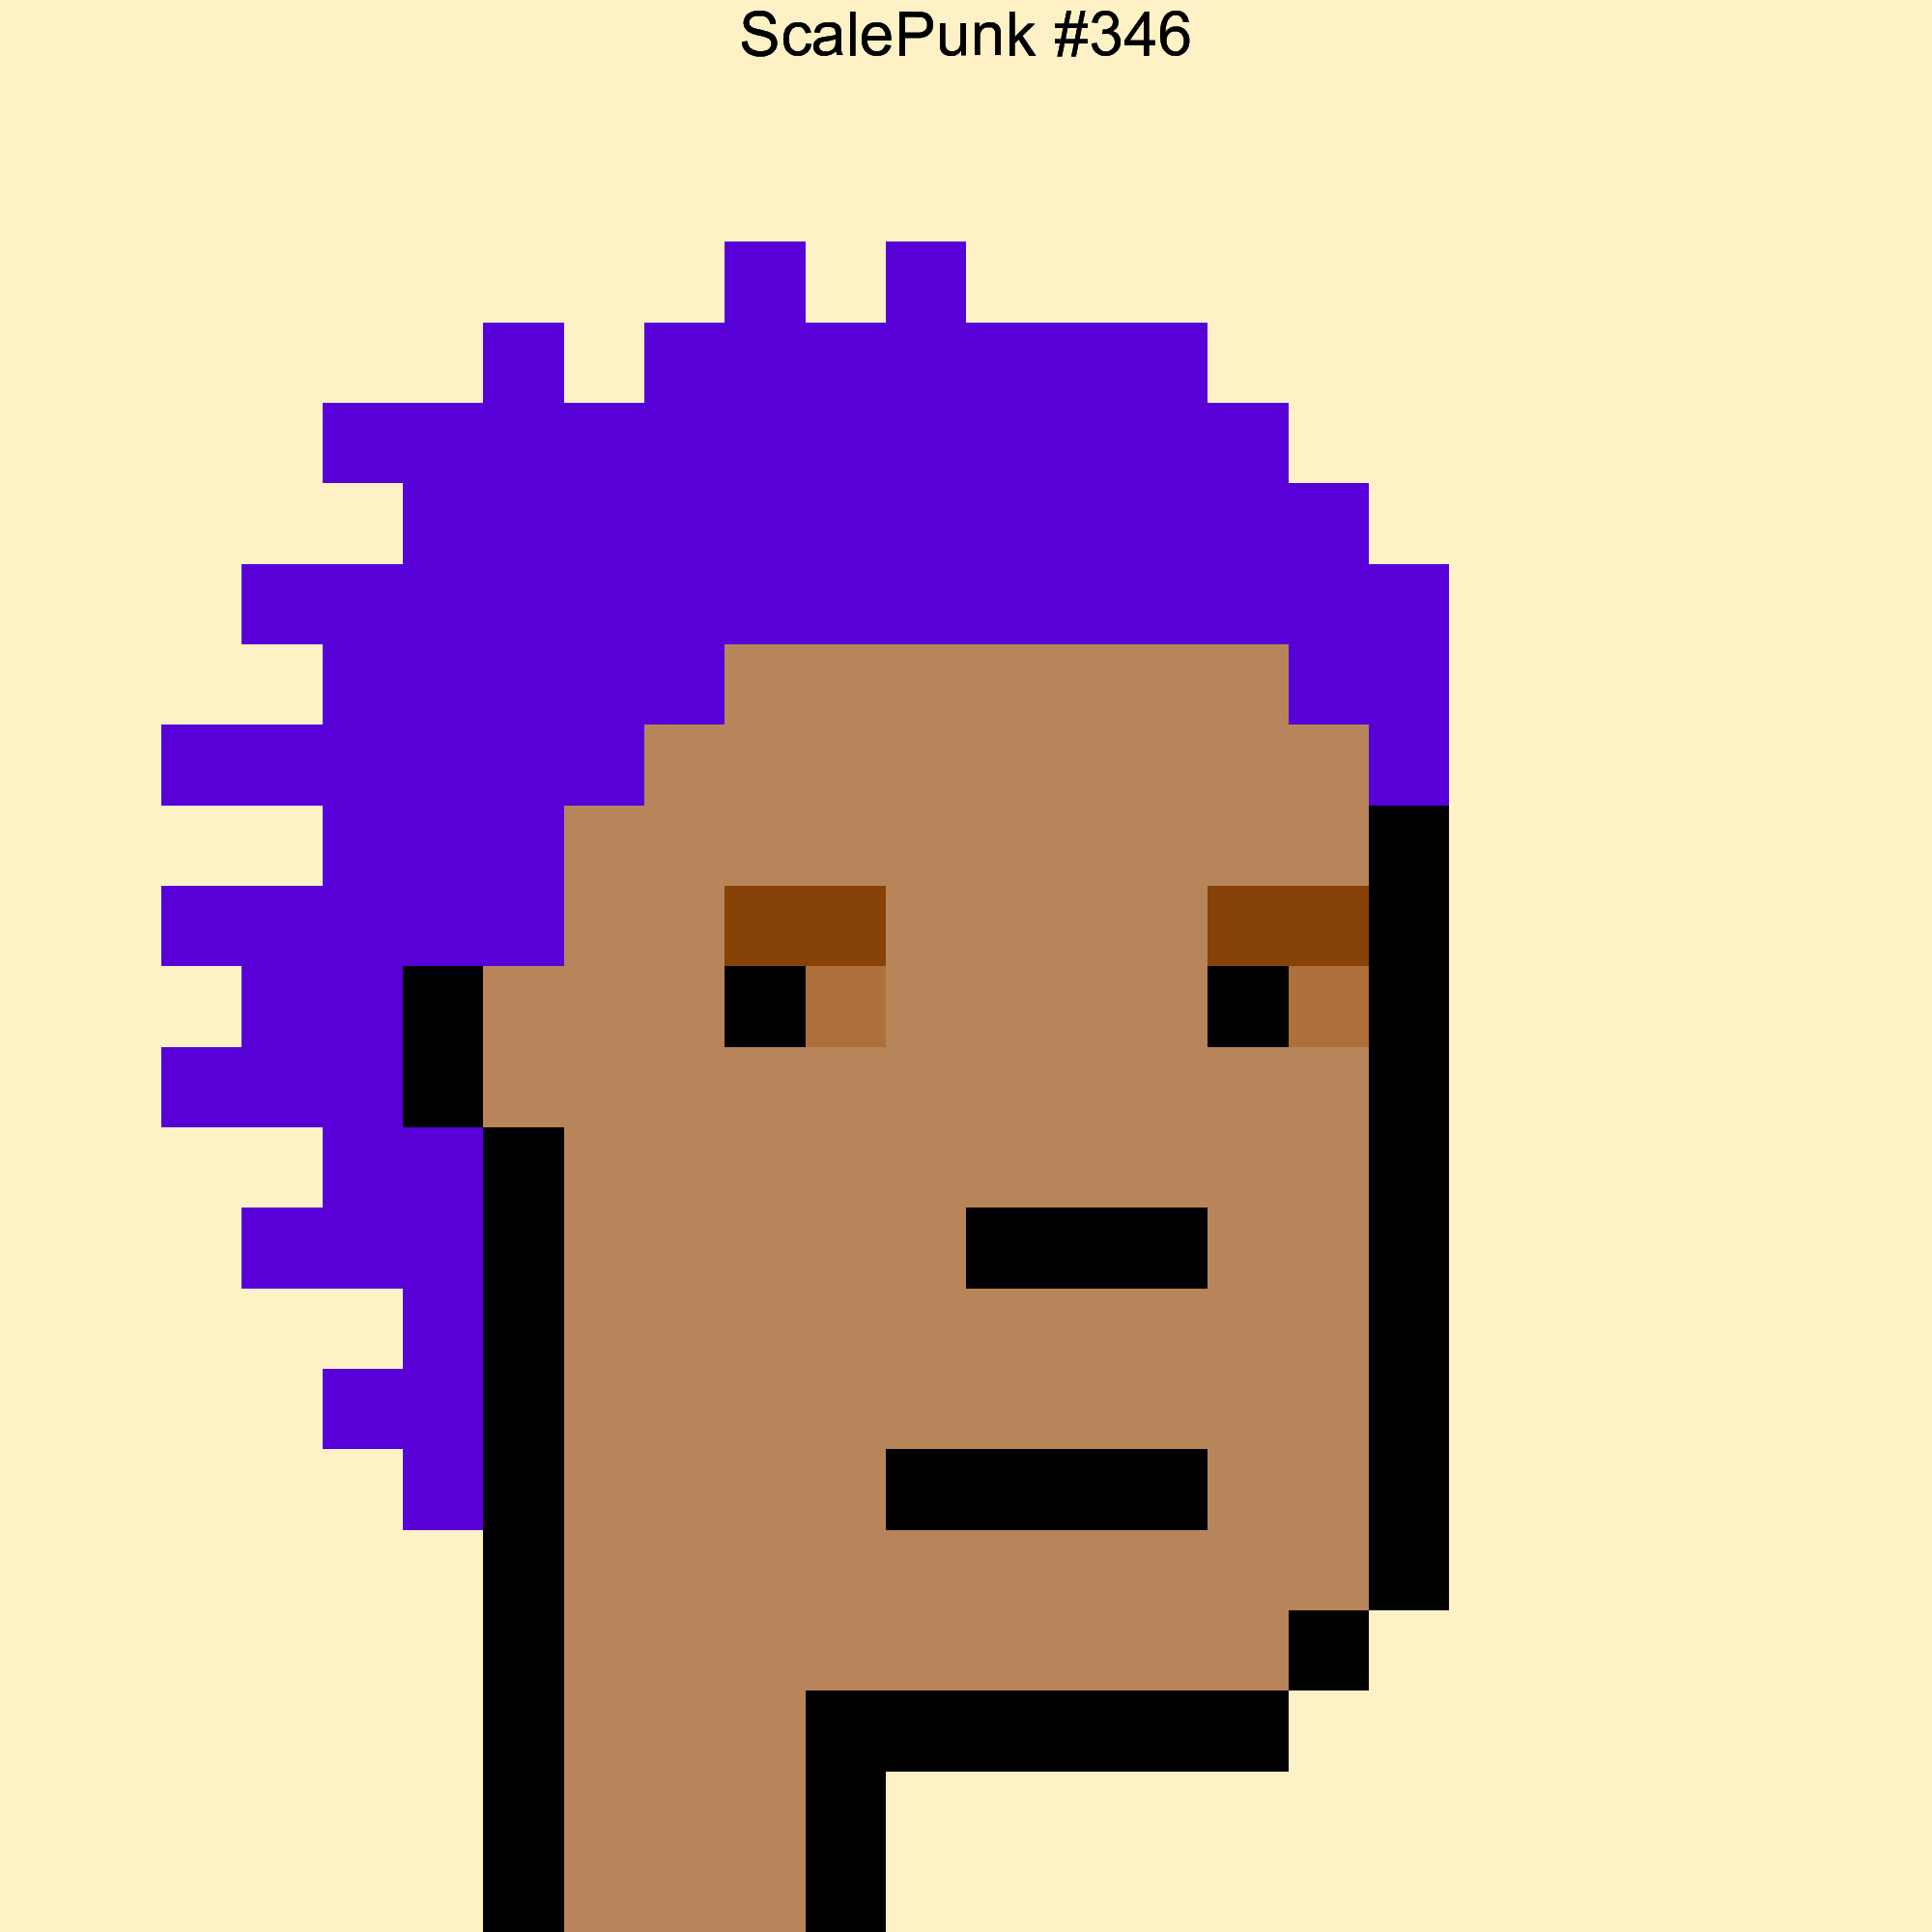 Punk 346